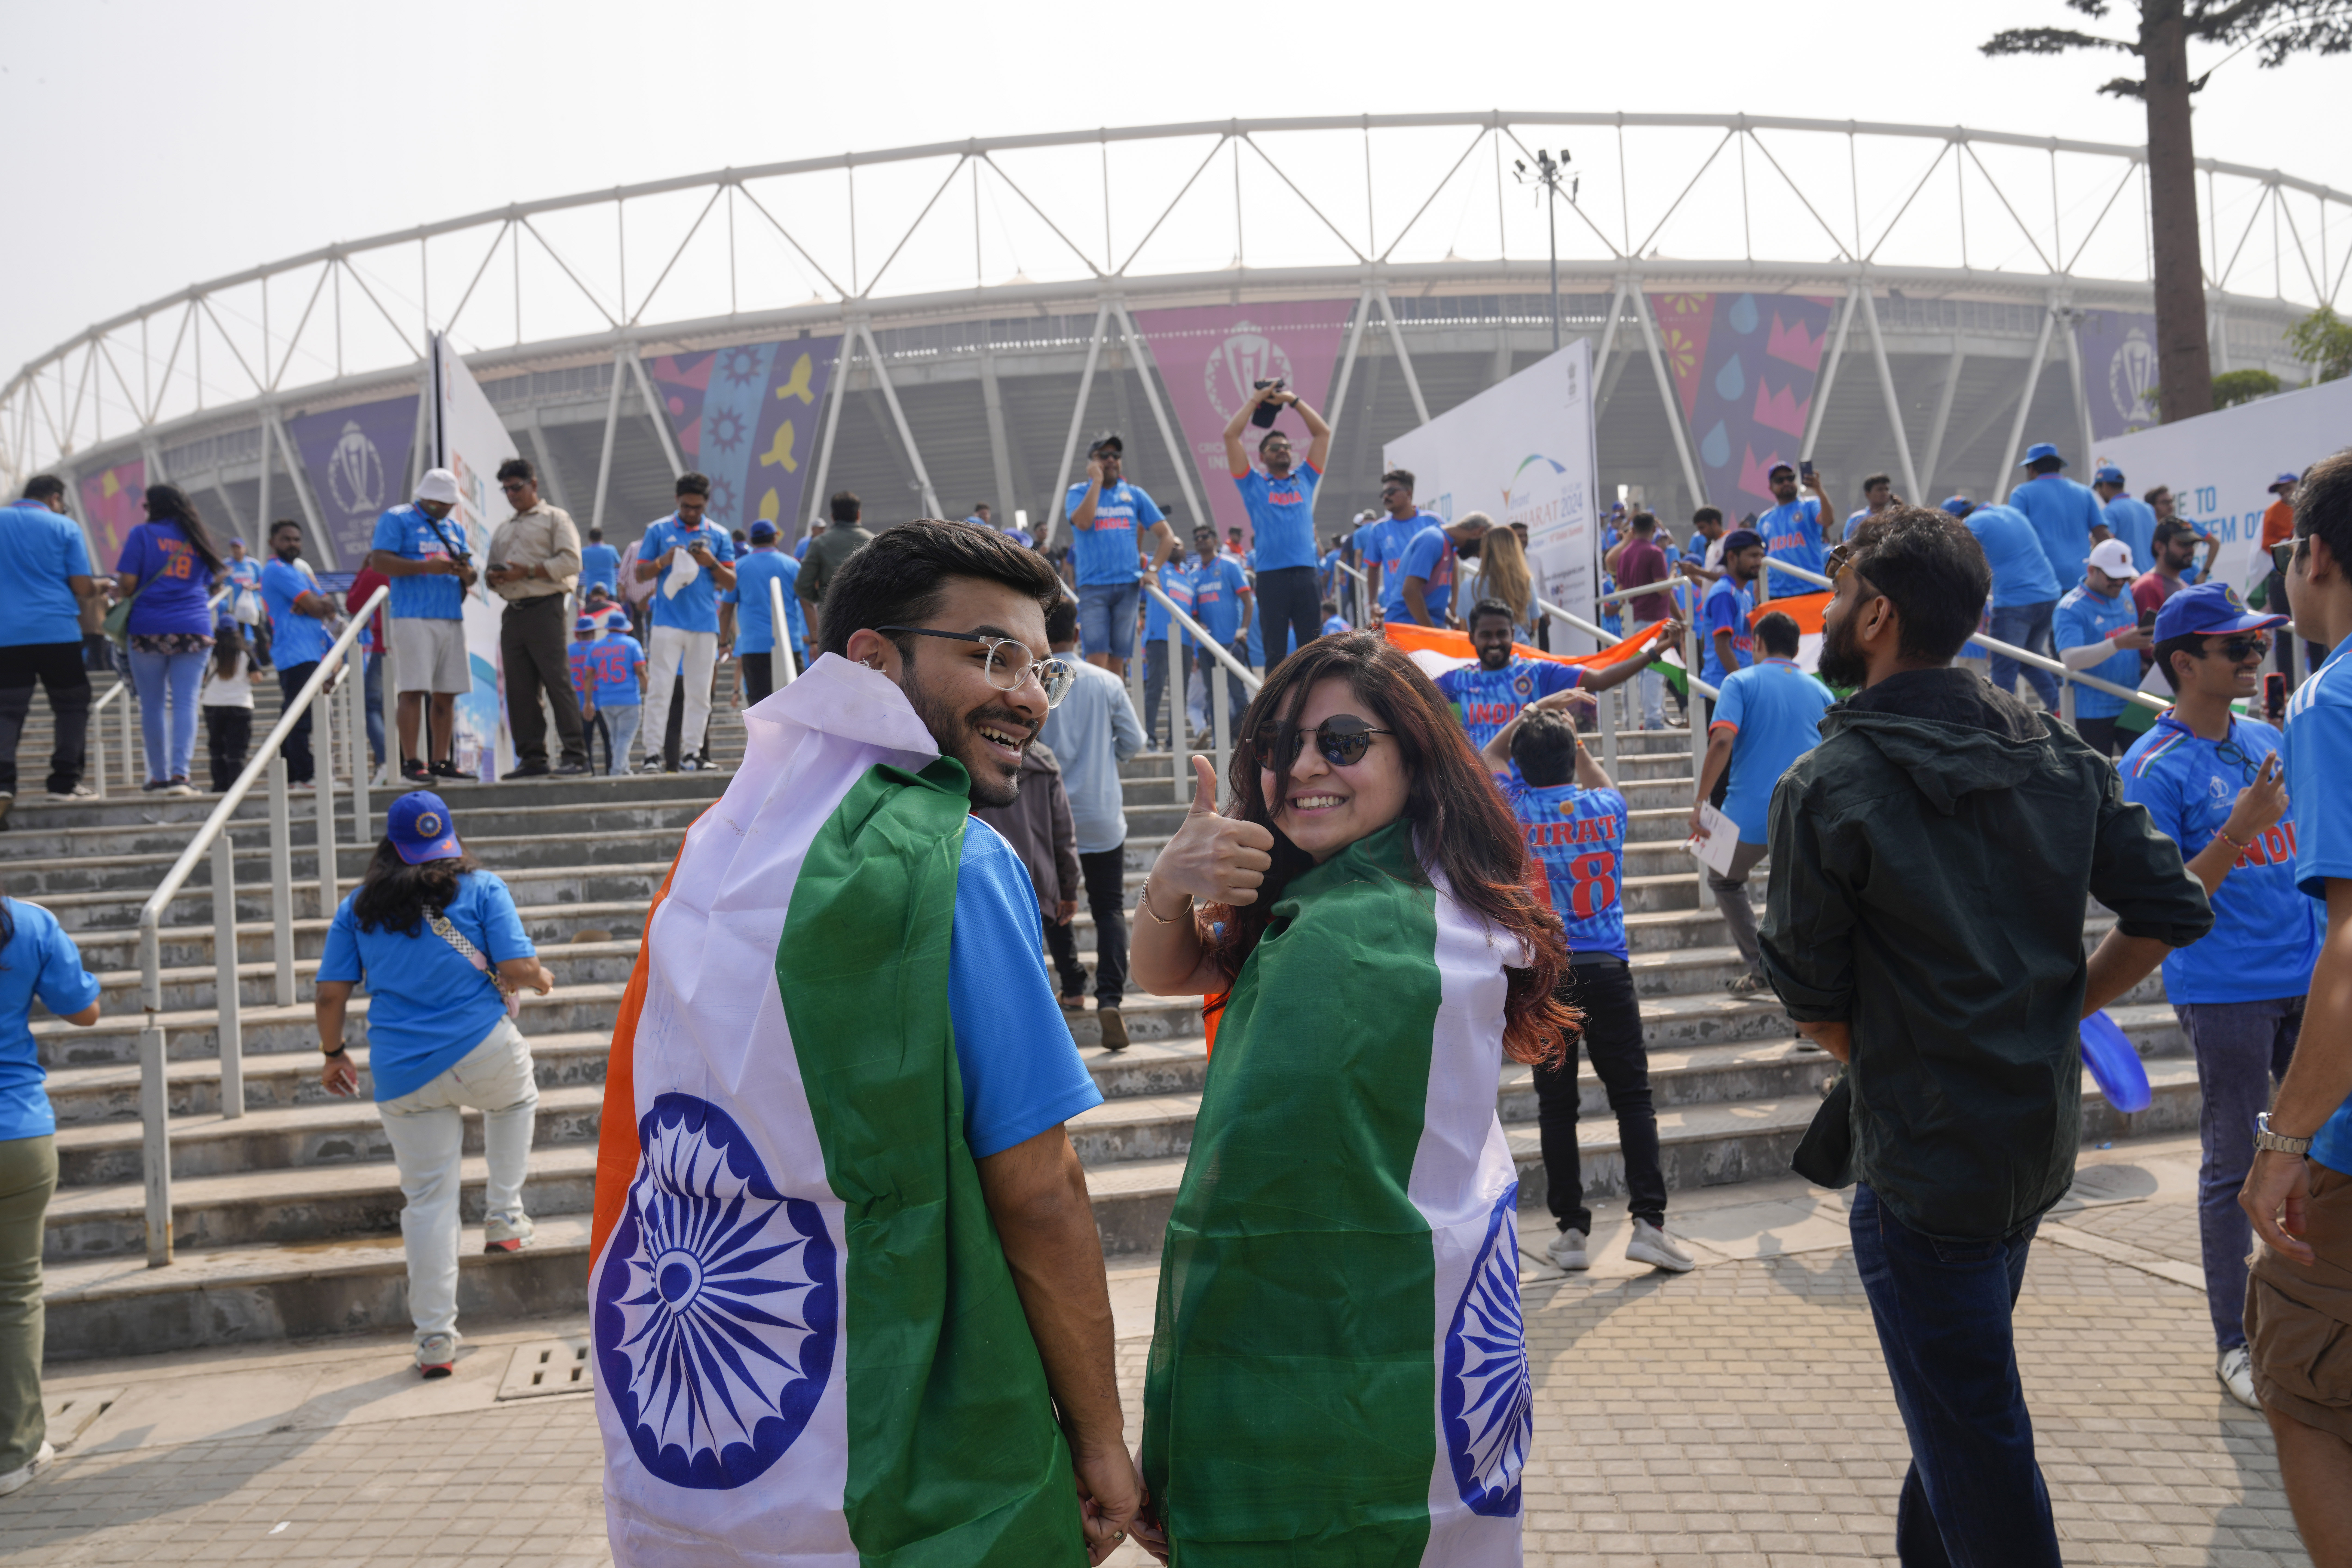 भारतीय टीम का झंड़ा लिए खुशी जाहिर करता युवा खूबसूरत कपल